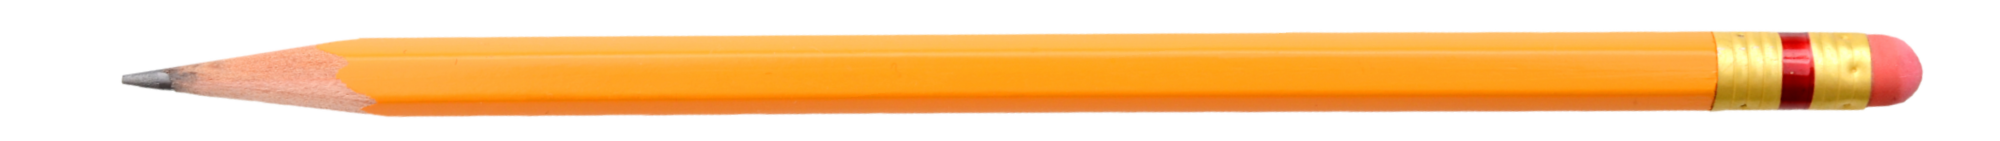 image of a pencil